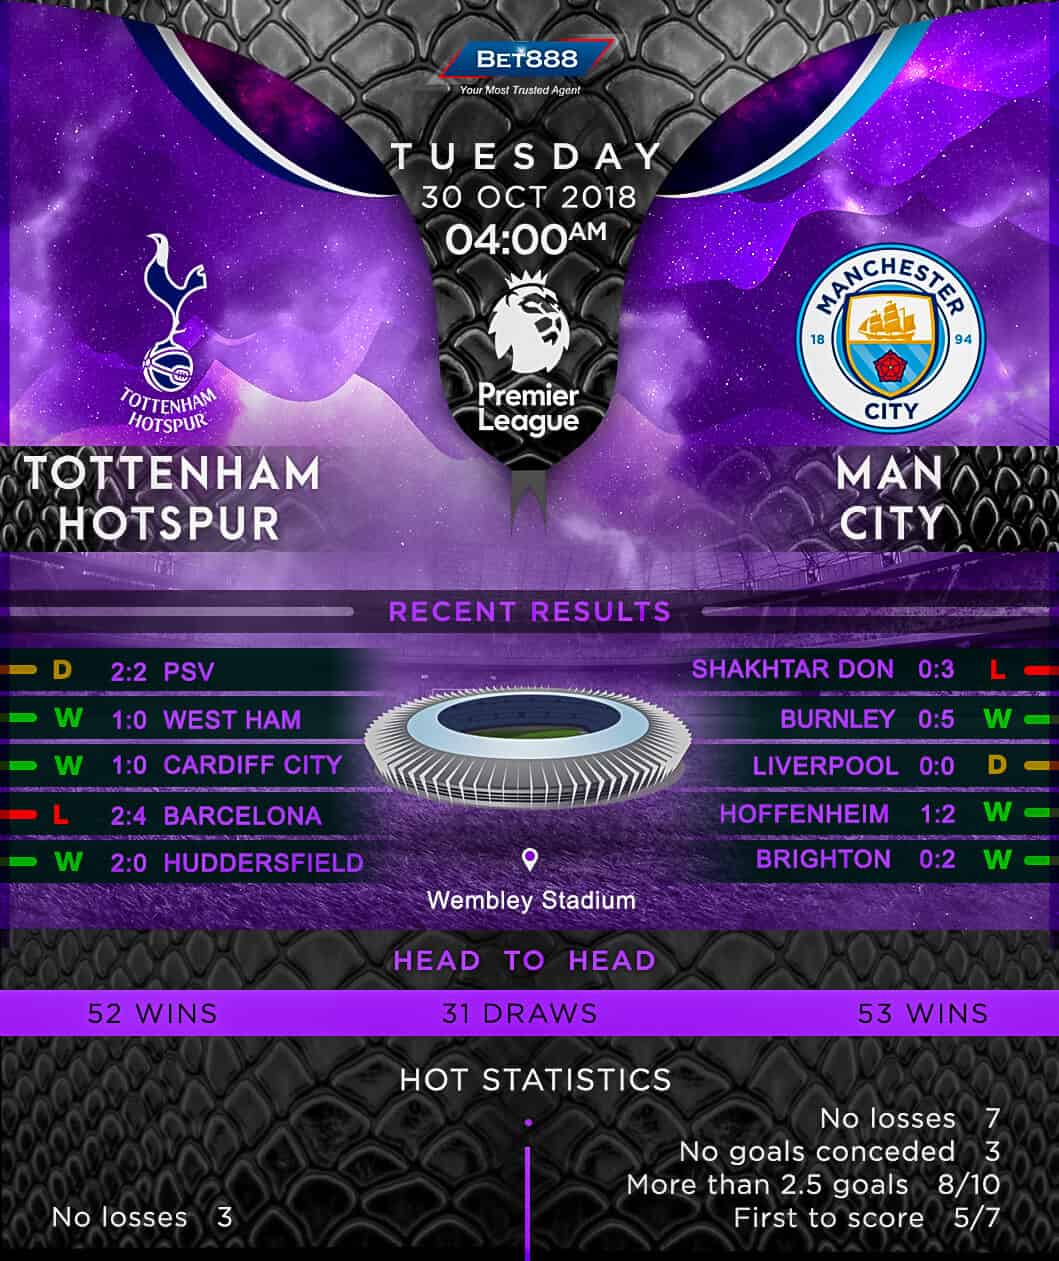 Tottenham Hotspur vs Manchester City 30/10/18